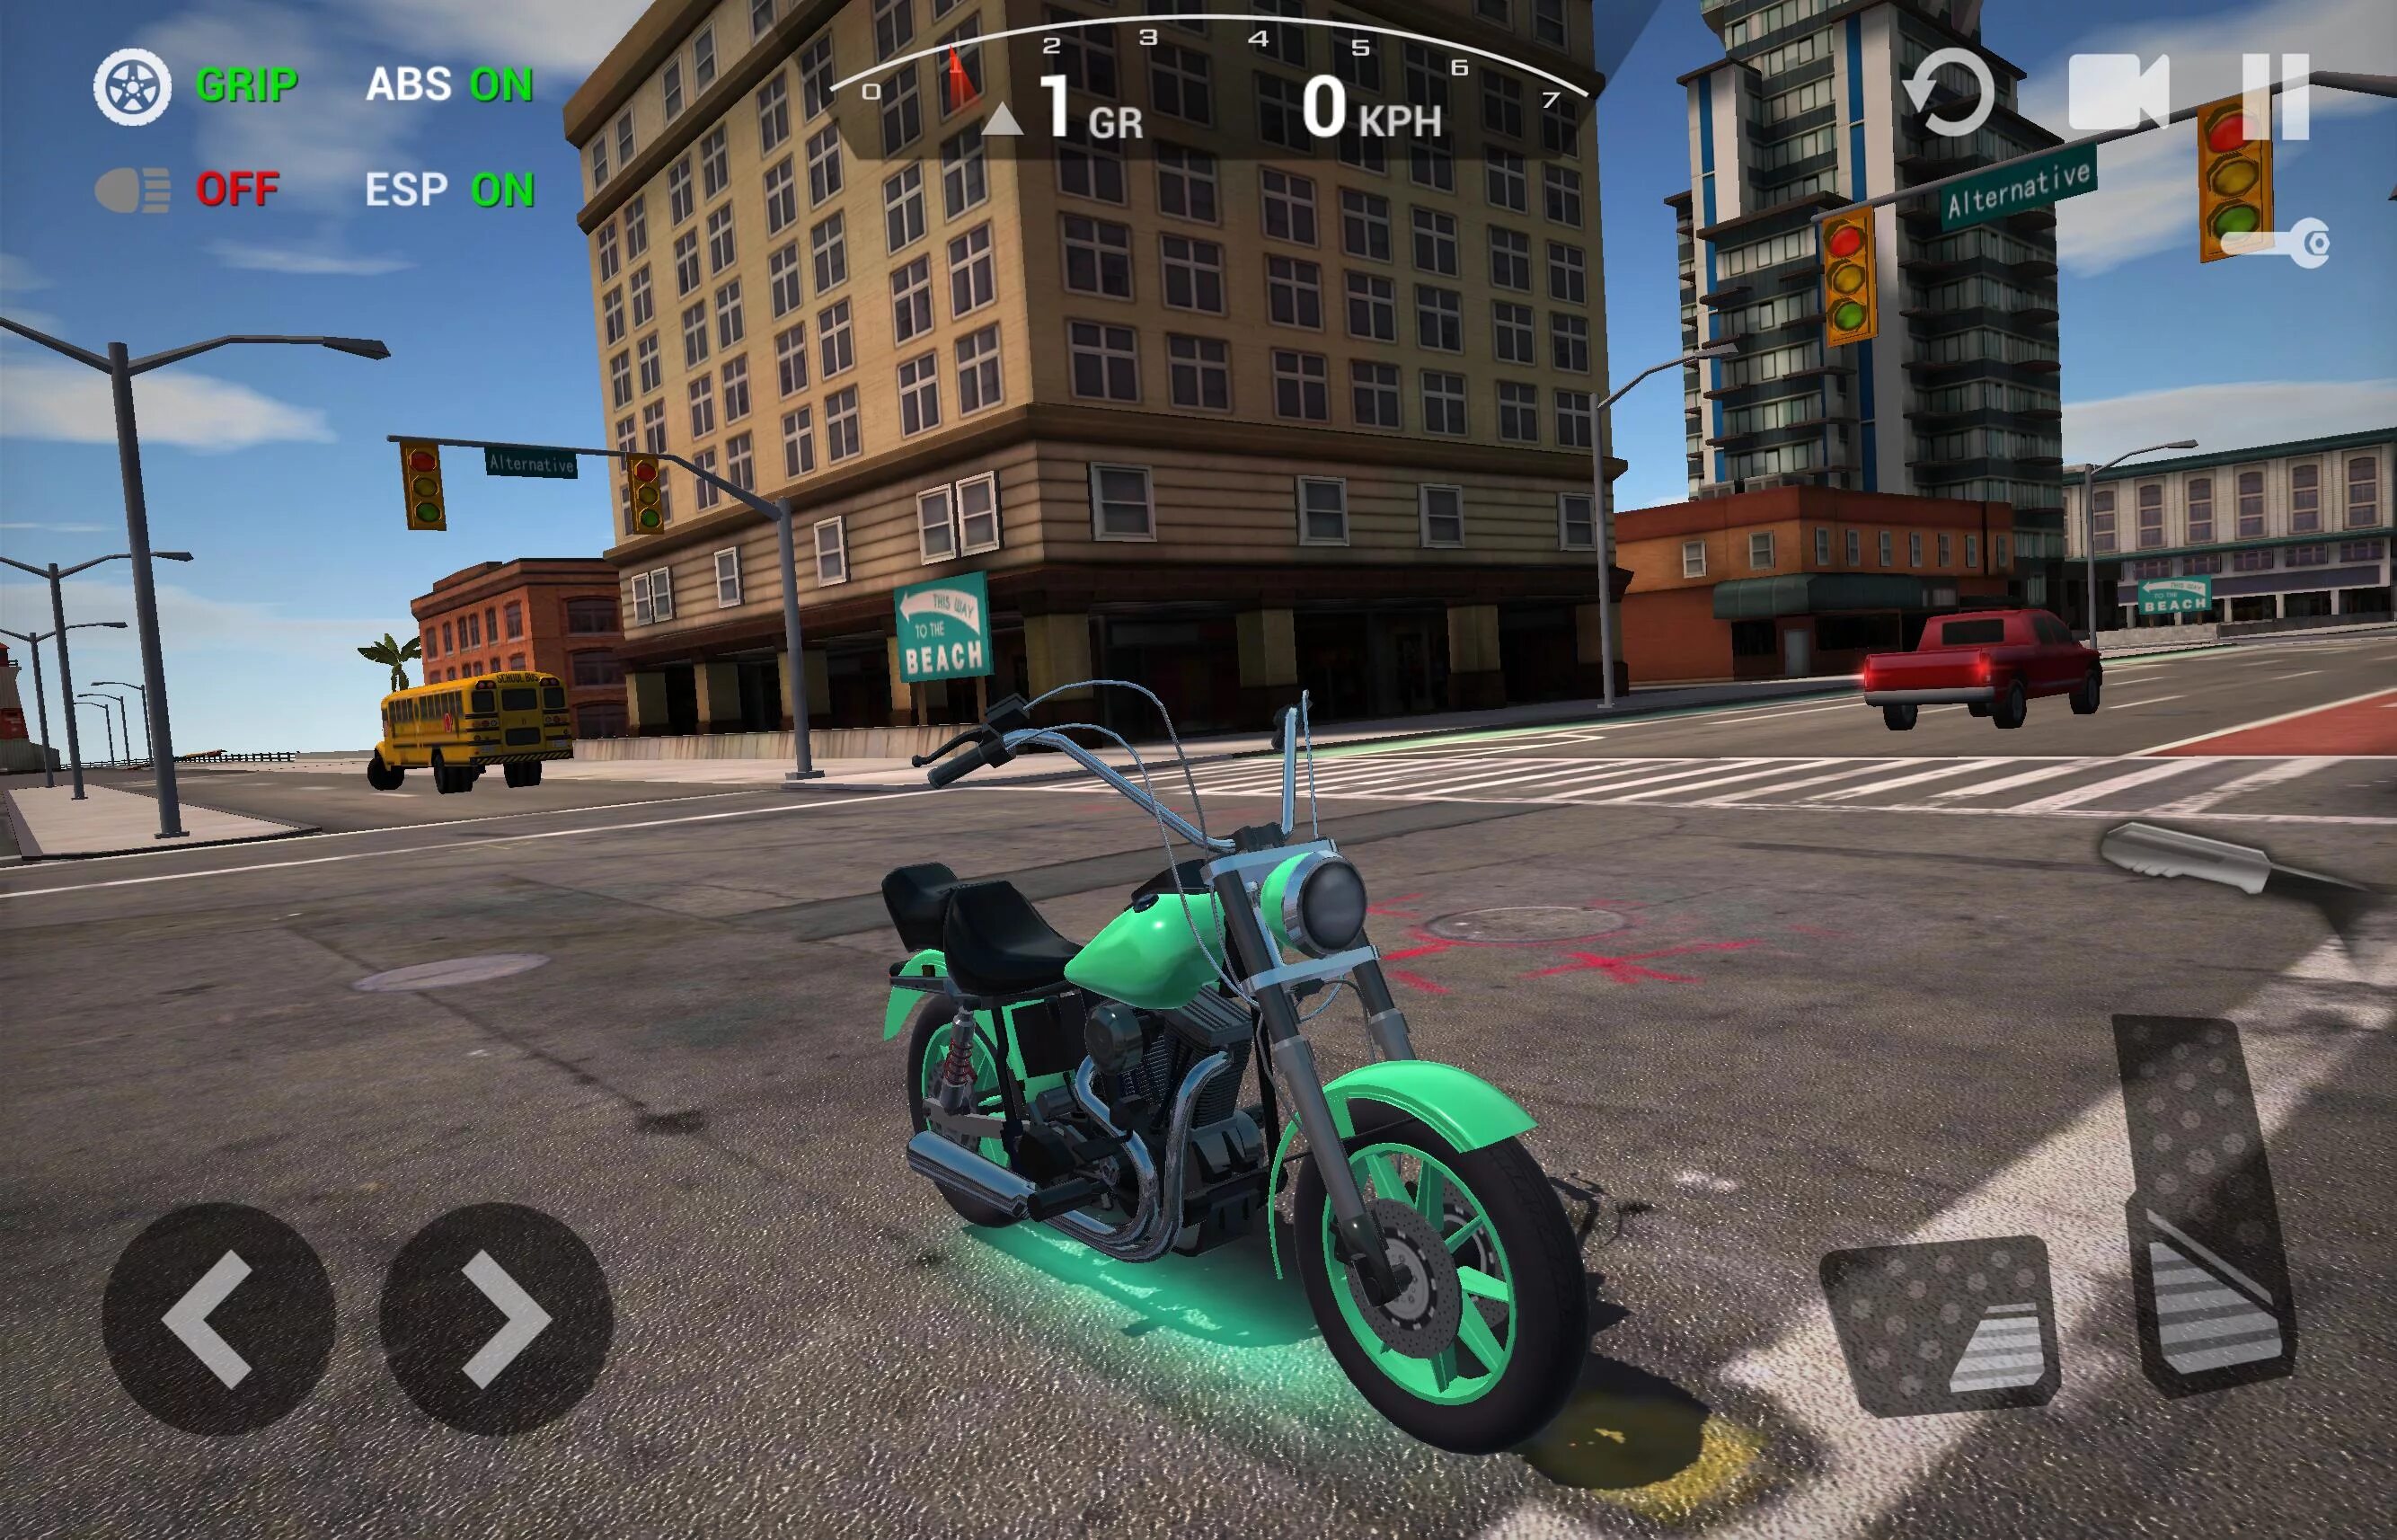 Ультимейт мотоцикл симулятор. Ultimate Motorcycle Simulator андроид. Мото игры на андроид. Гонки по городу на мотоциклах. Игра где мотоцикл человек